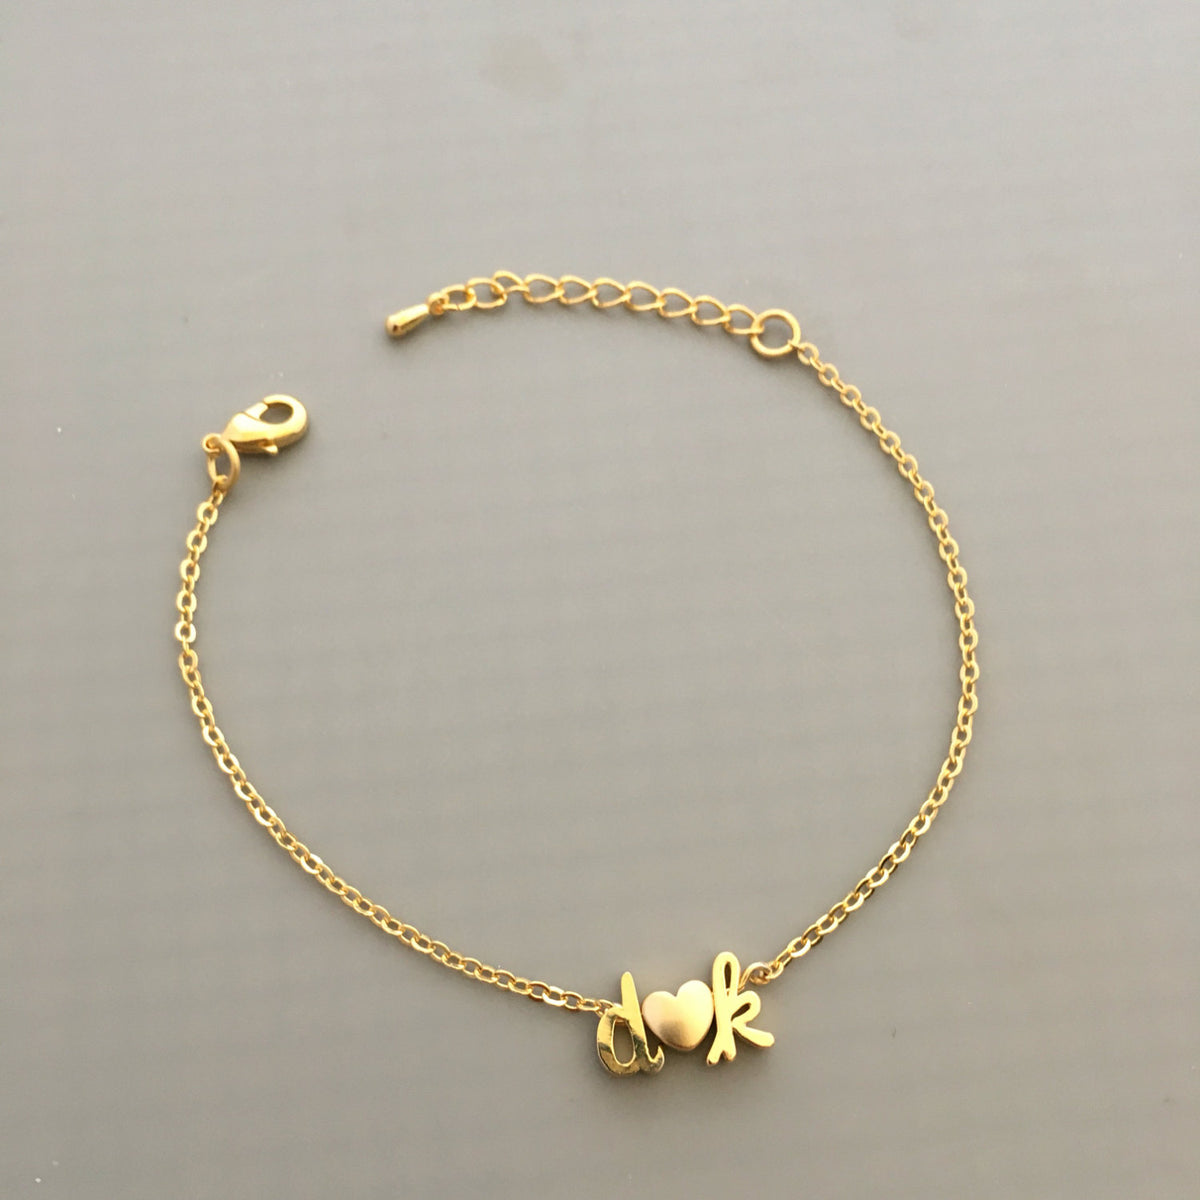 Dainty silver gold rose gold lowercase cursive script initial bracelet –  Gemnotic